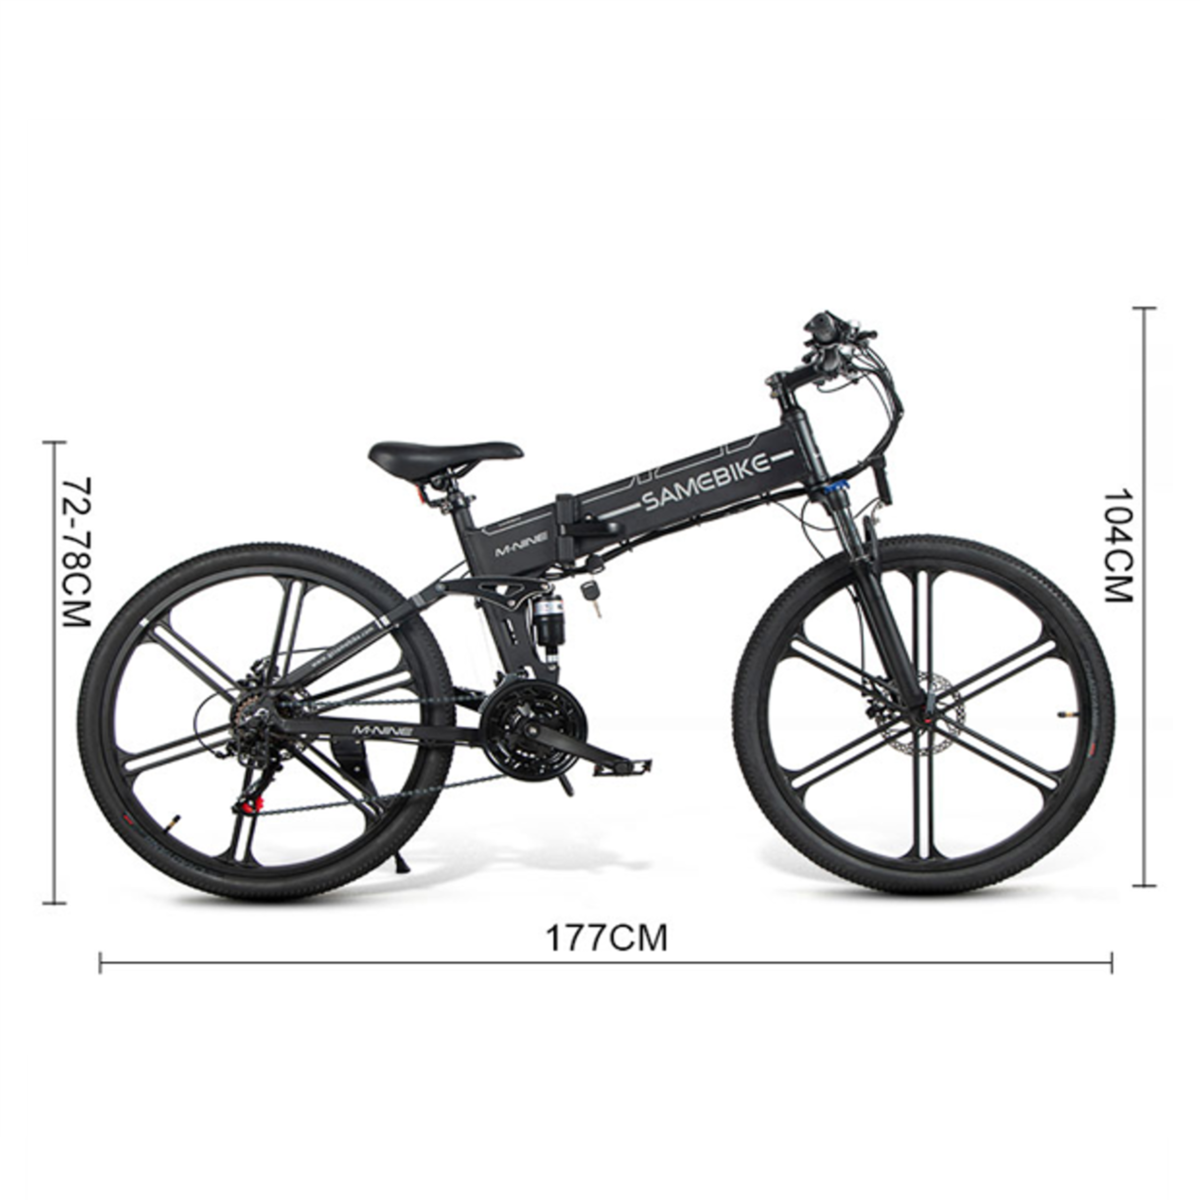 (Laufradgröße: II Unisex-Rad, Schwarz) LO26 26 Zoll, 480, SAMEBIKE Kompakt-/Faltrad